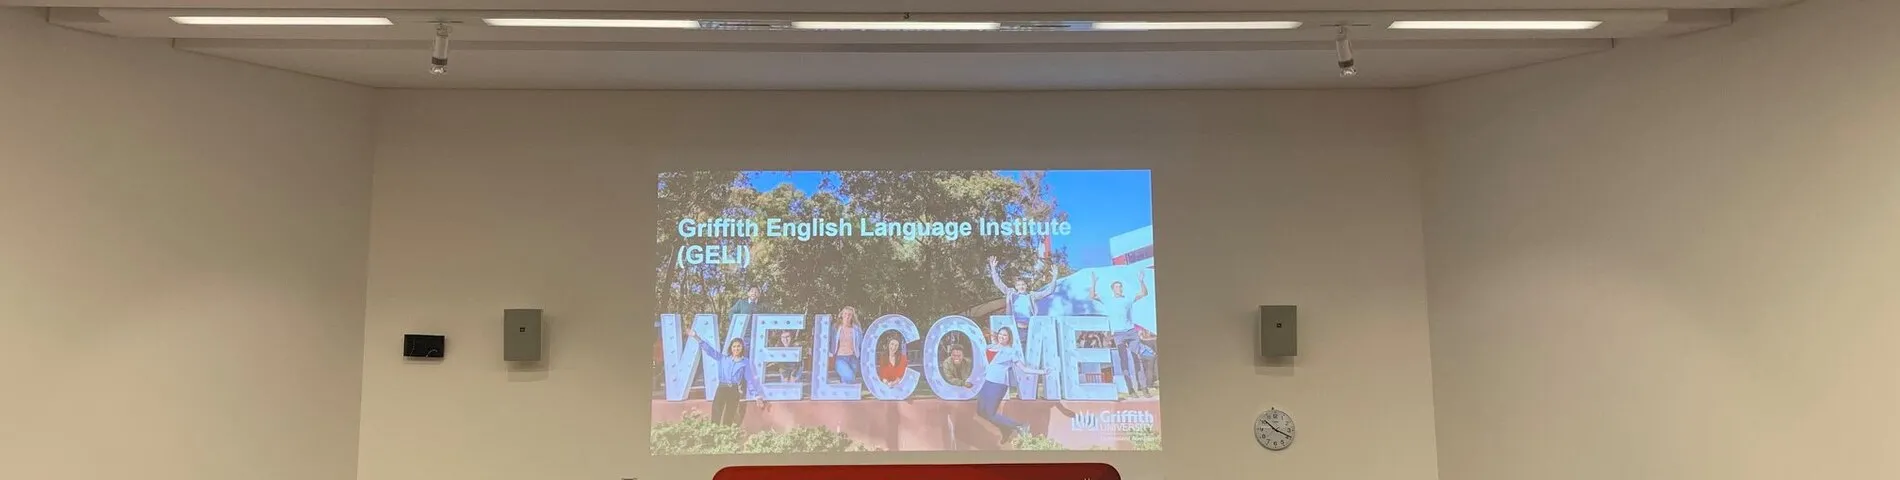 Griffith English Language Institute snímek 1	